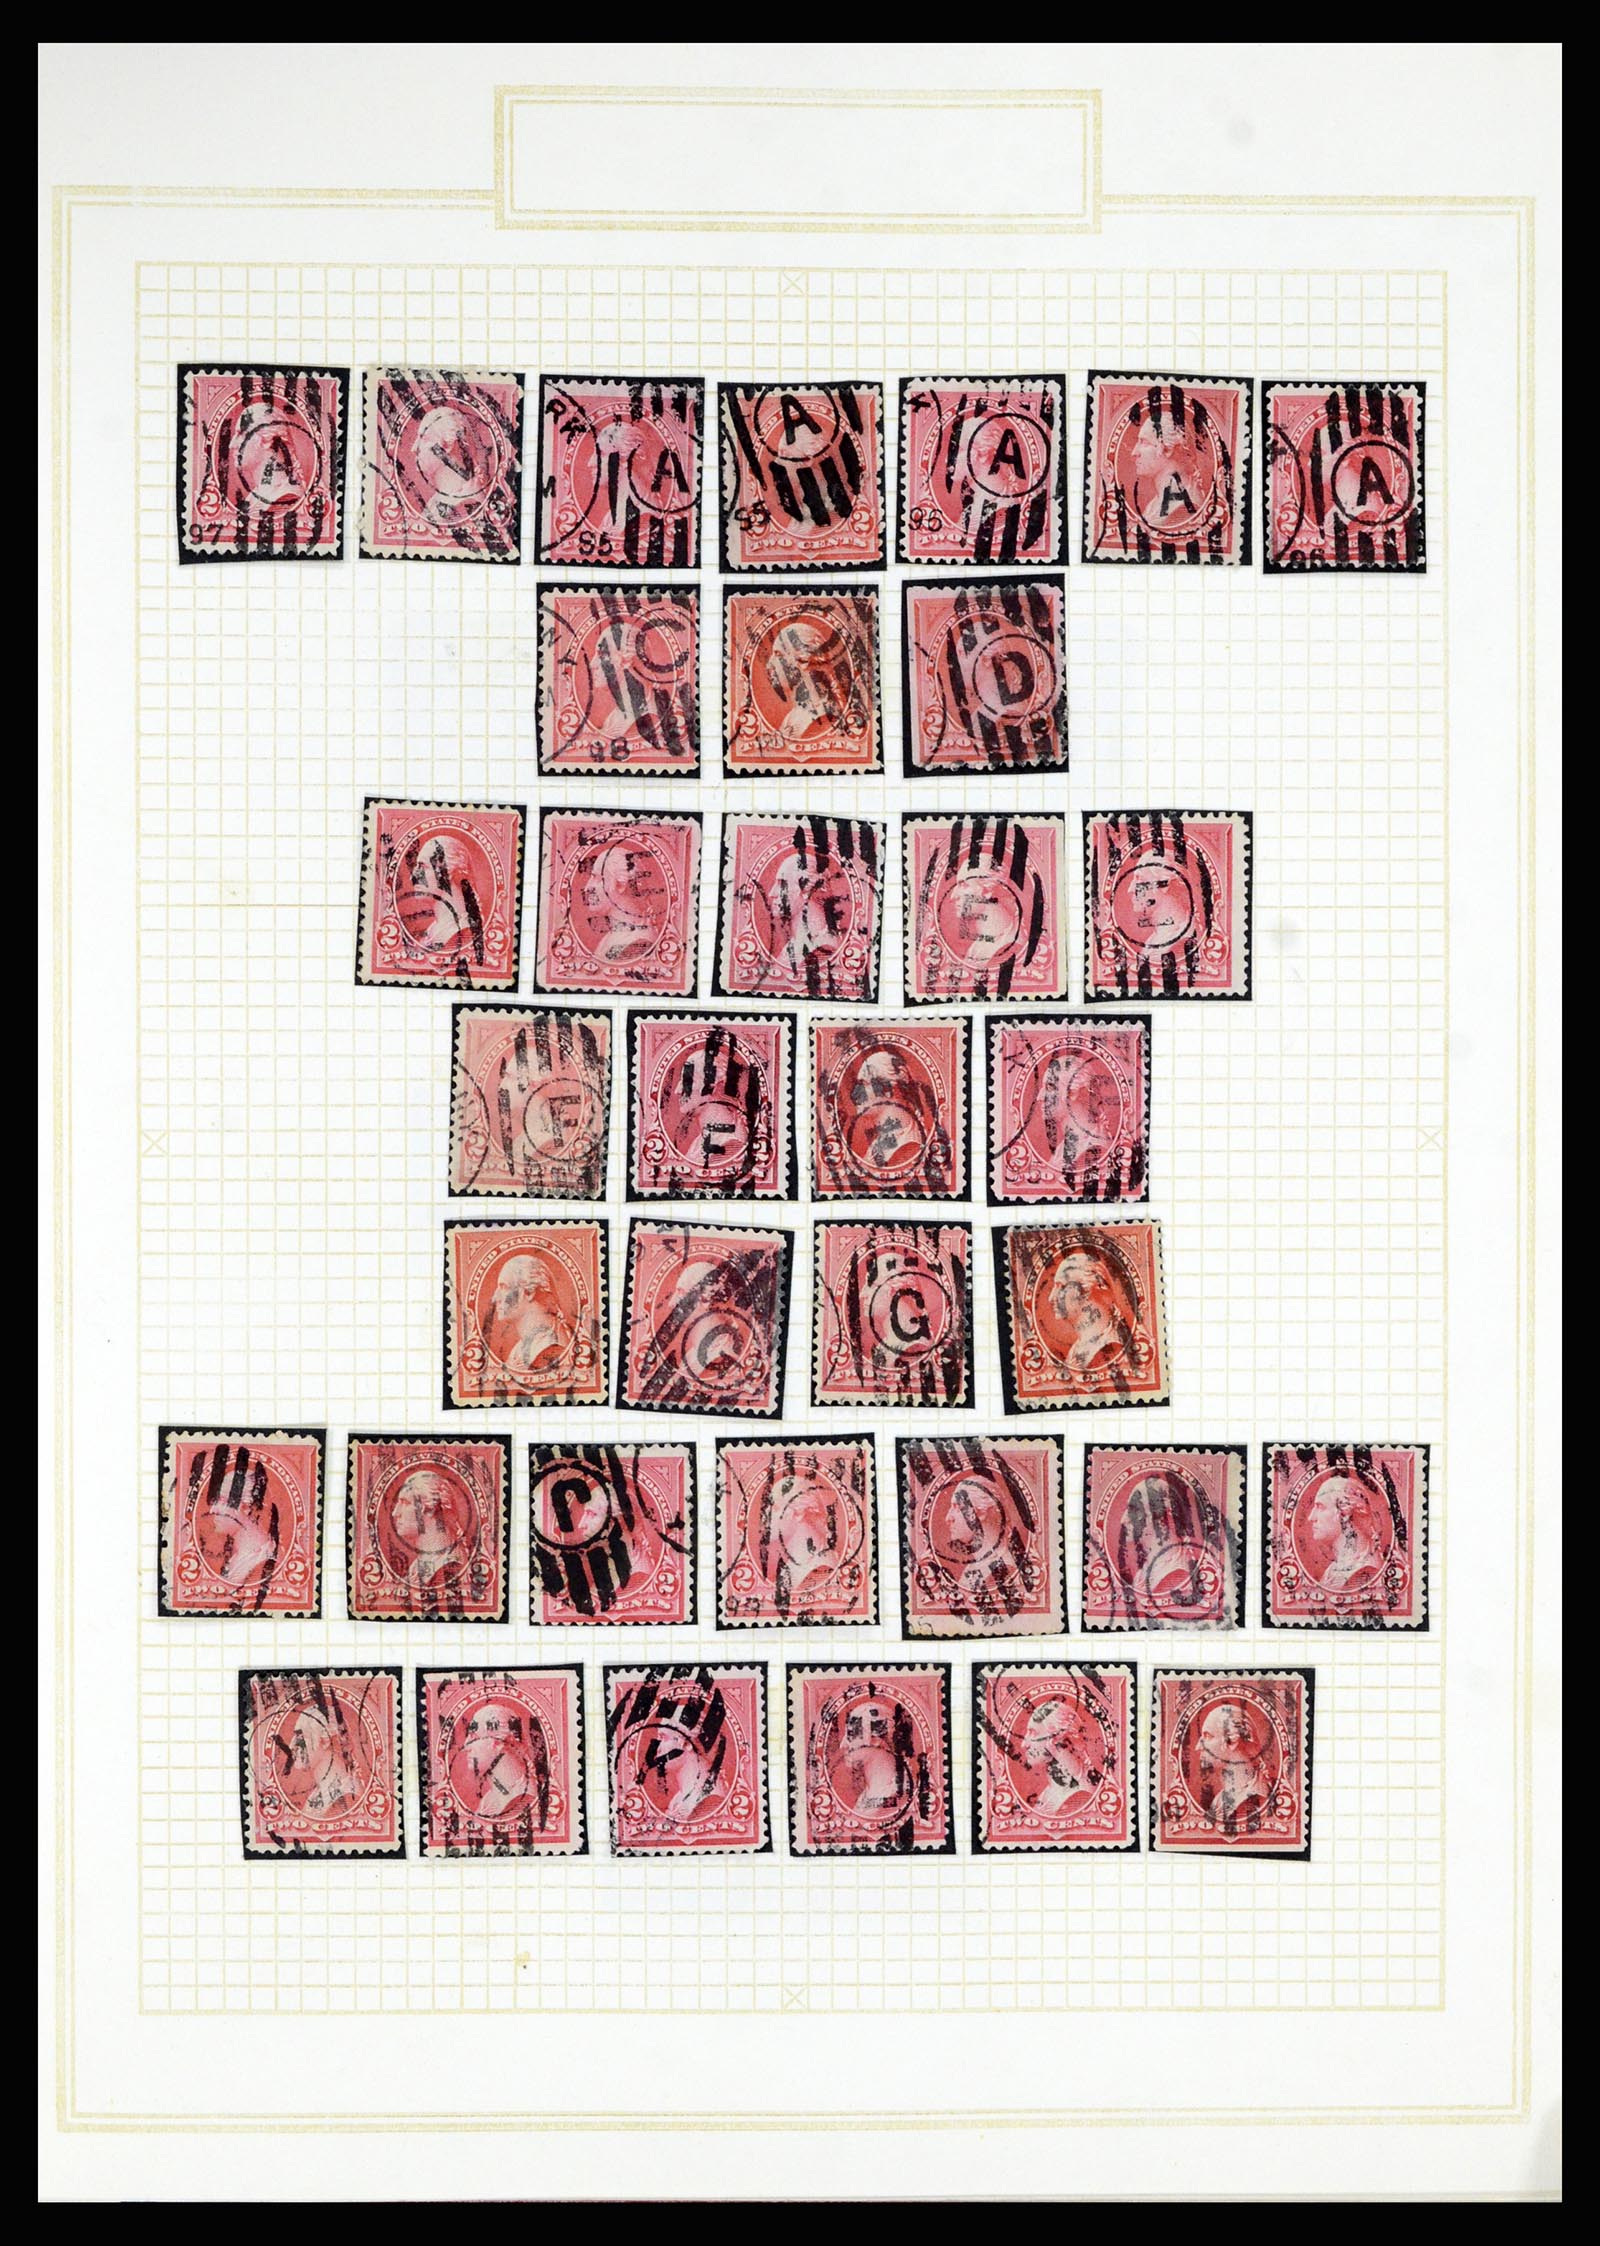 36866 019 - Stamp collection 36866 USA sorting lot.